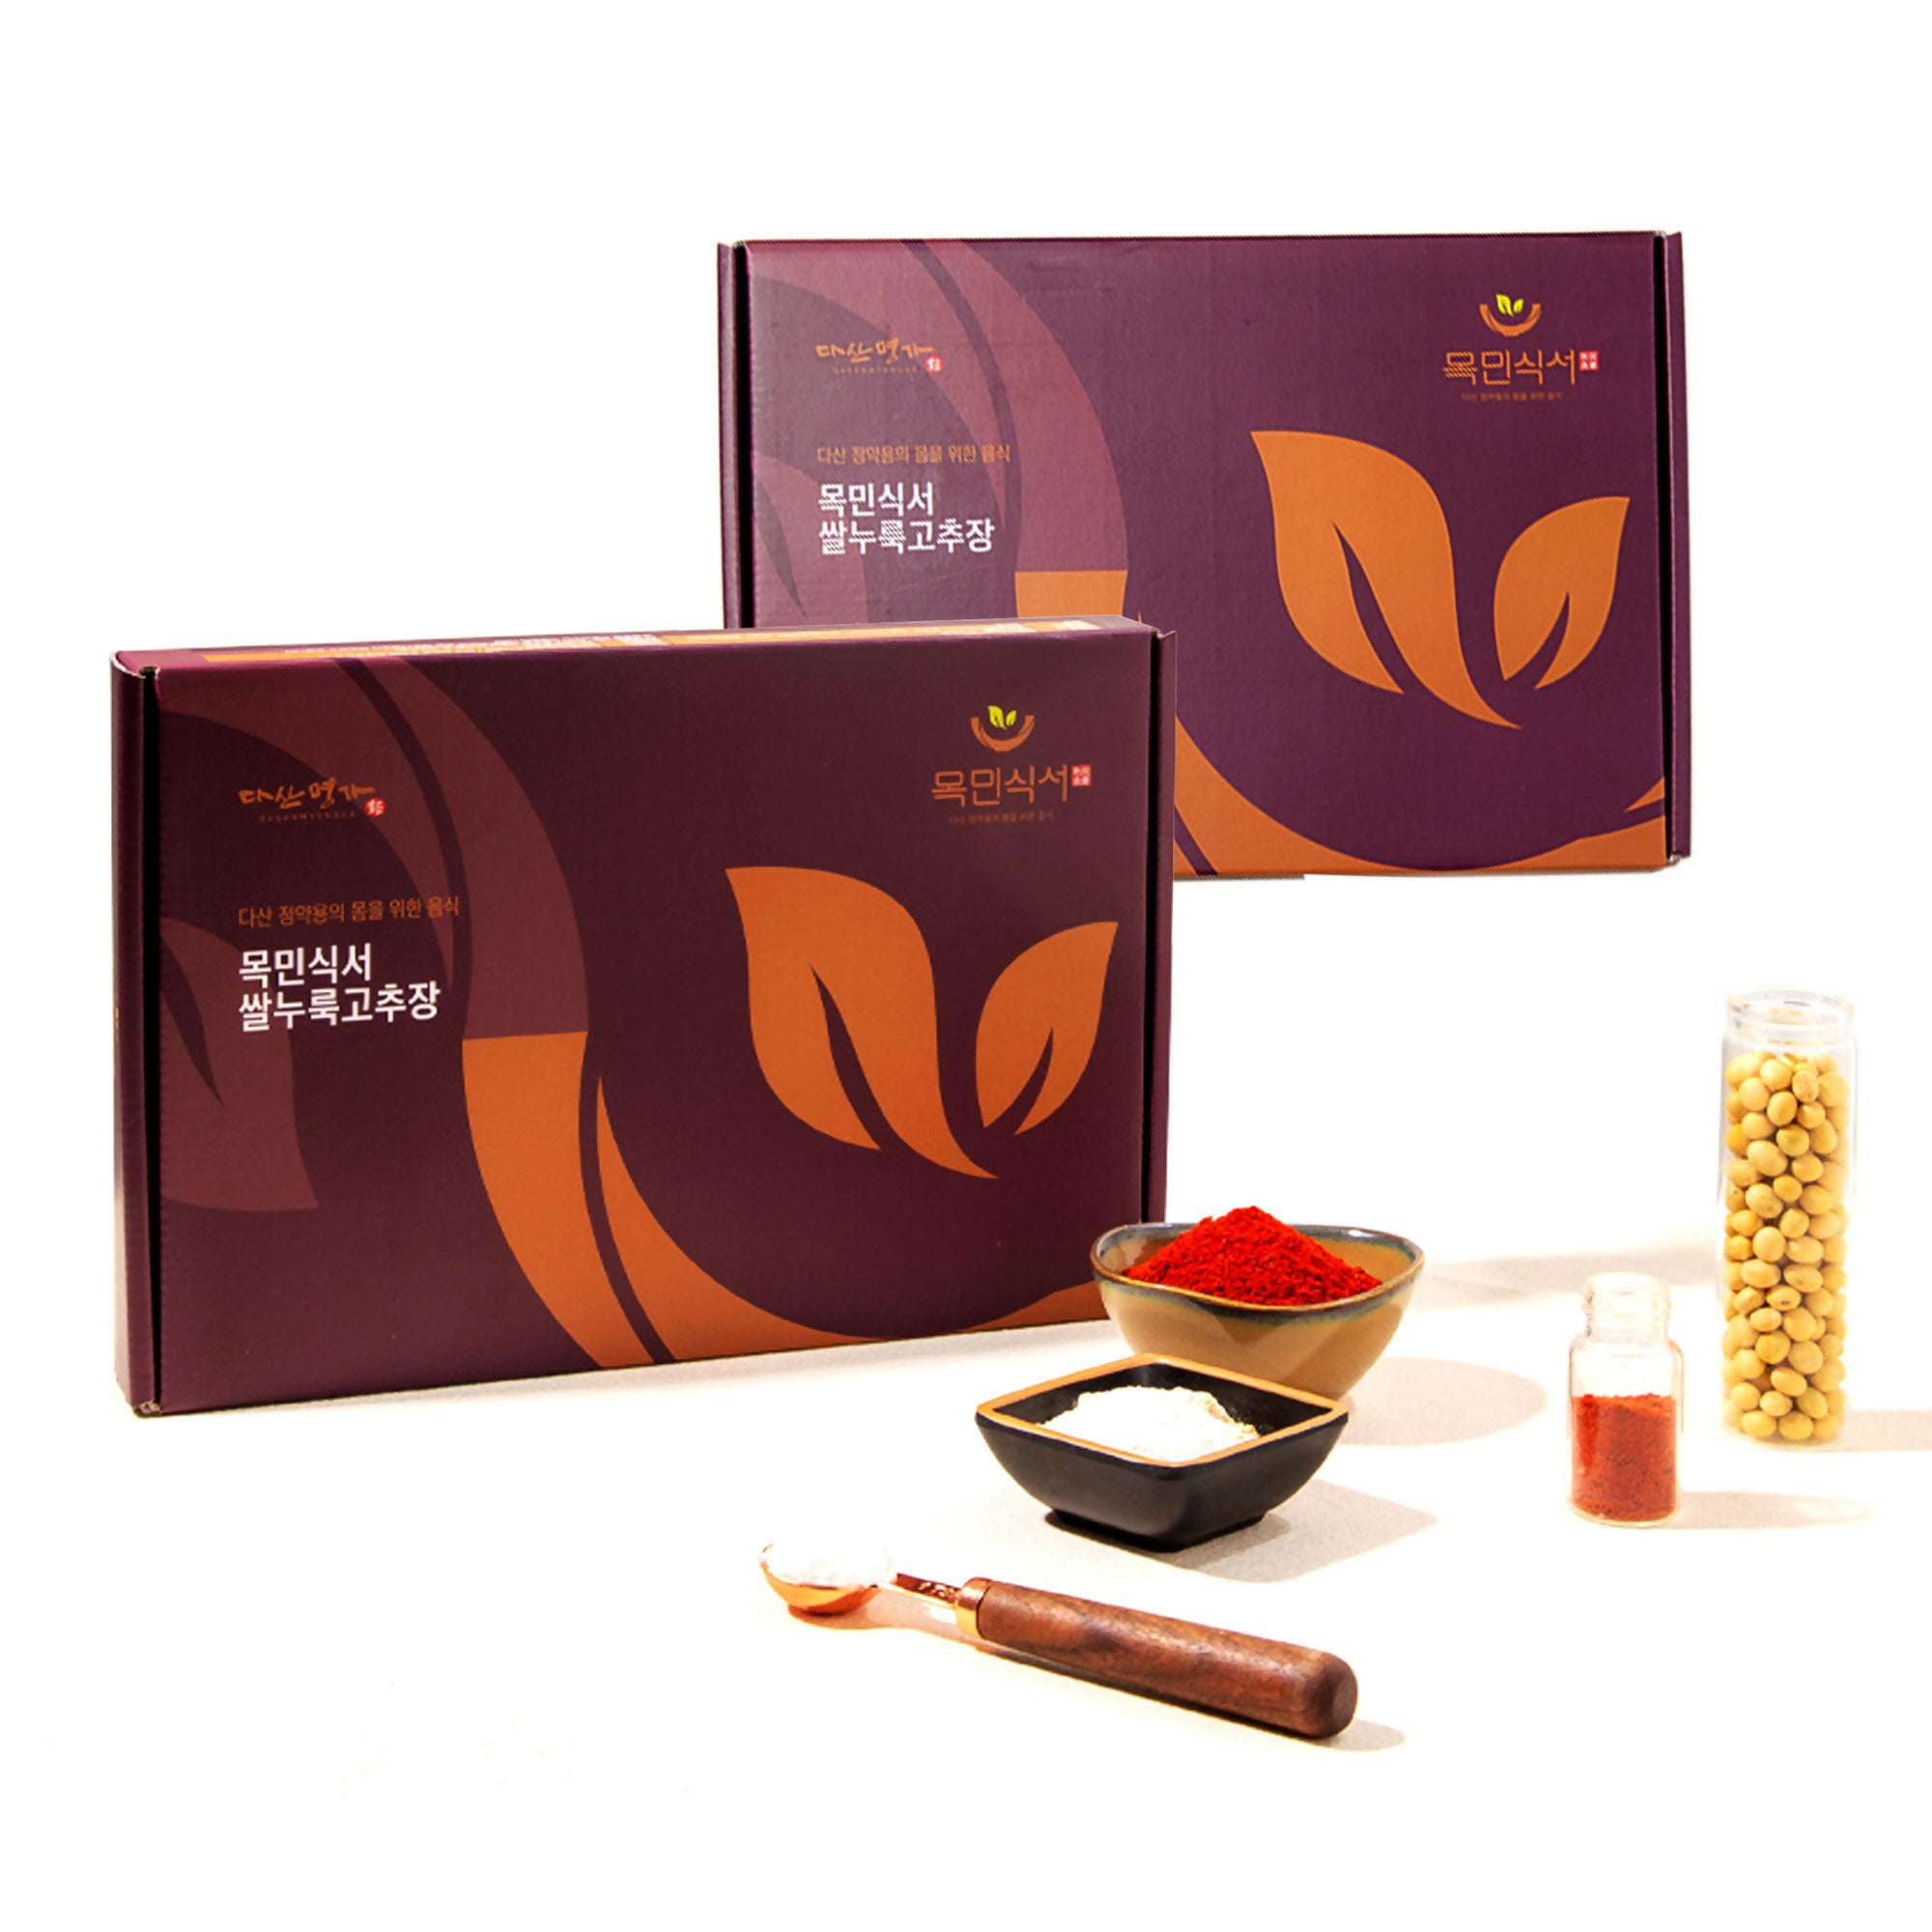 Korean Chili Paste DIY Kit (2 Box) | 다산명가 목민식서 쌀누룩고추장 DIY Kit - 나만의 고추장을 간편하게